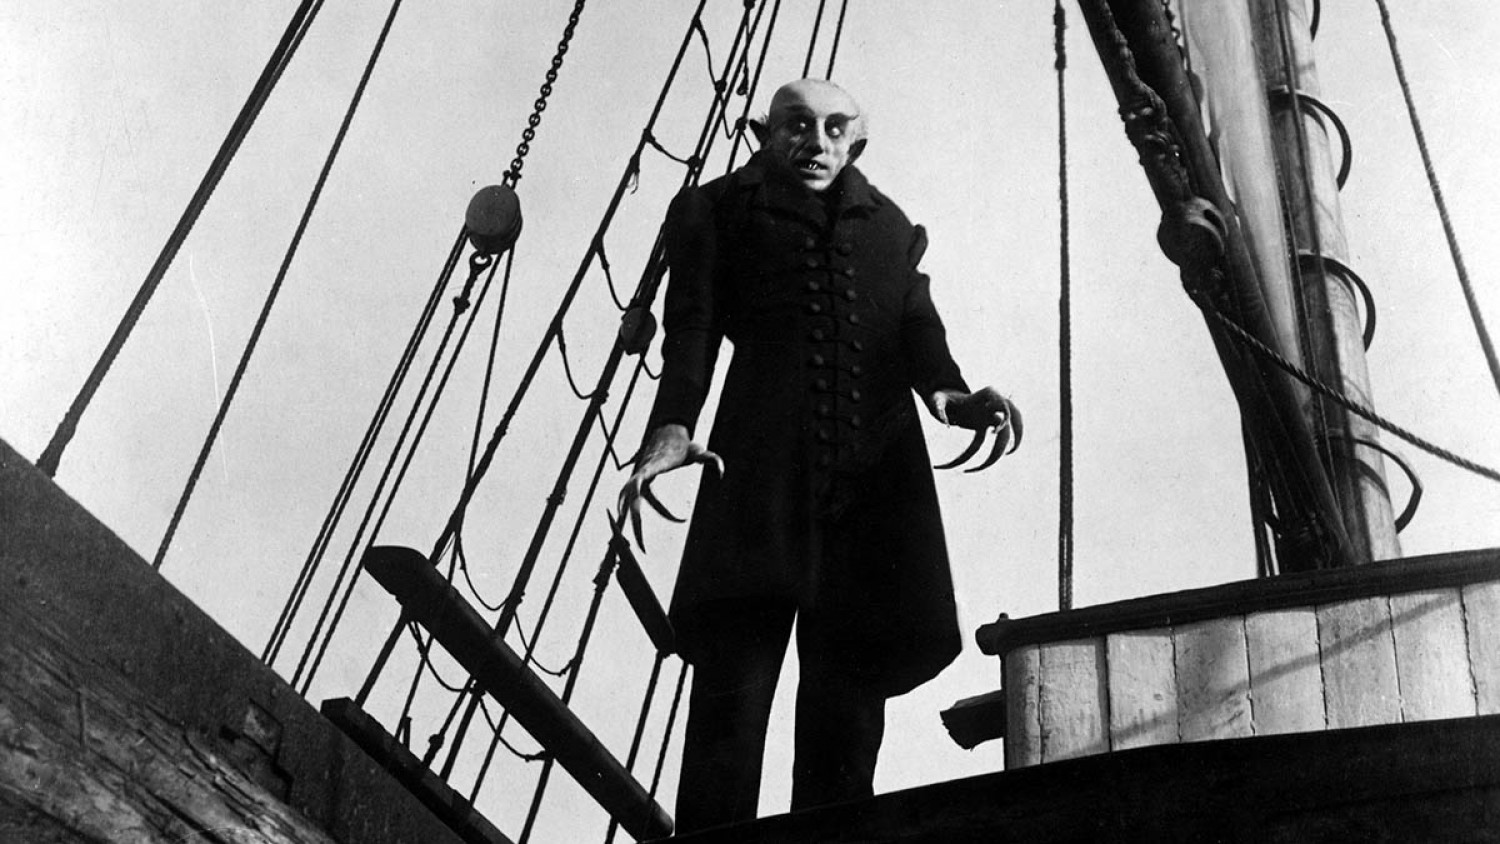 Filmoteca d’Estiu celebra los 100 años del ‘Nosferatu’ de Murnau